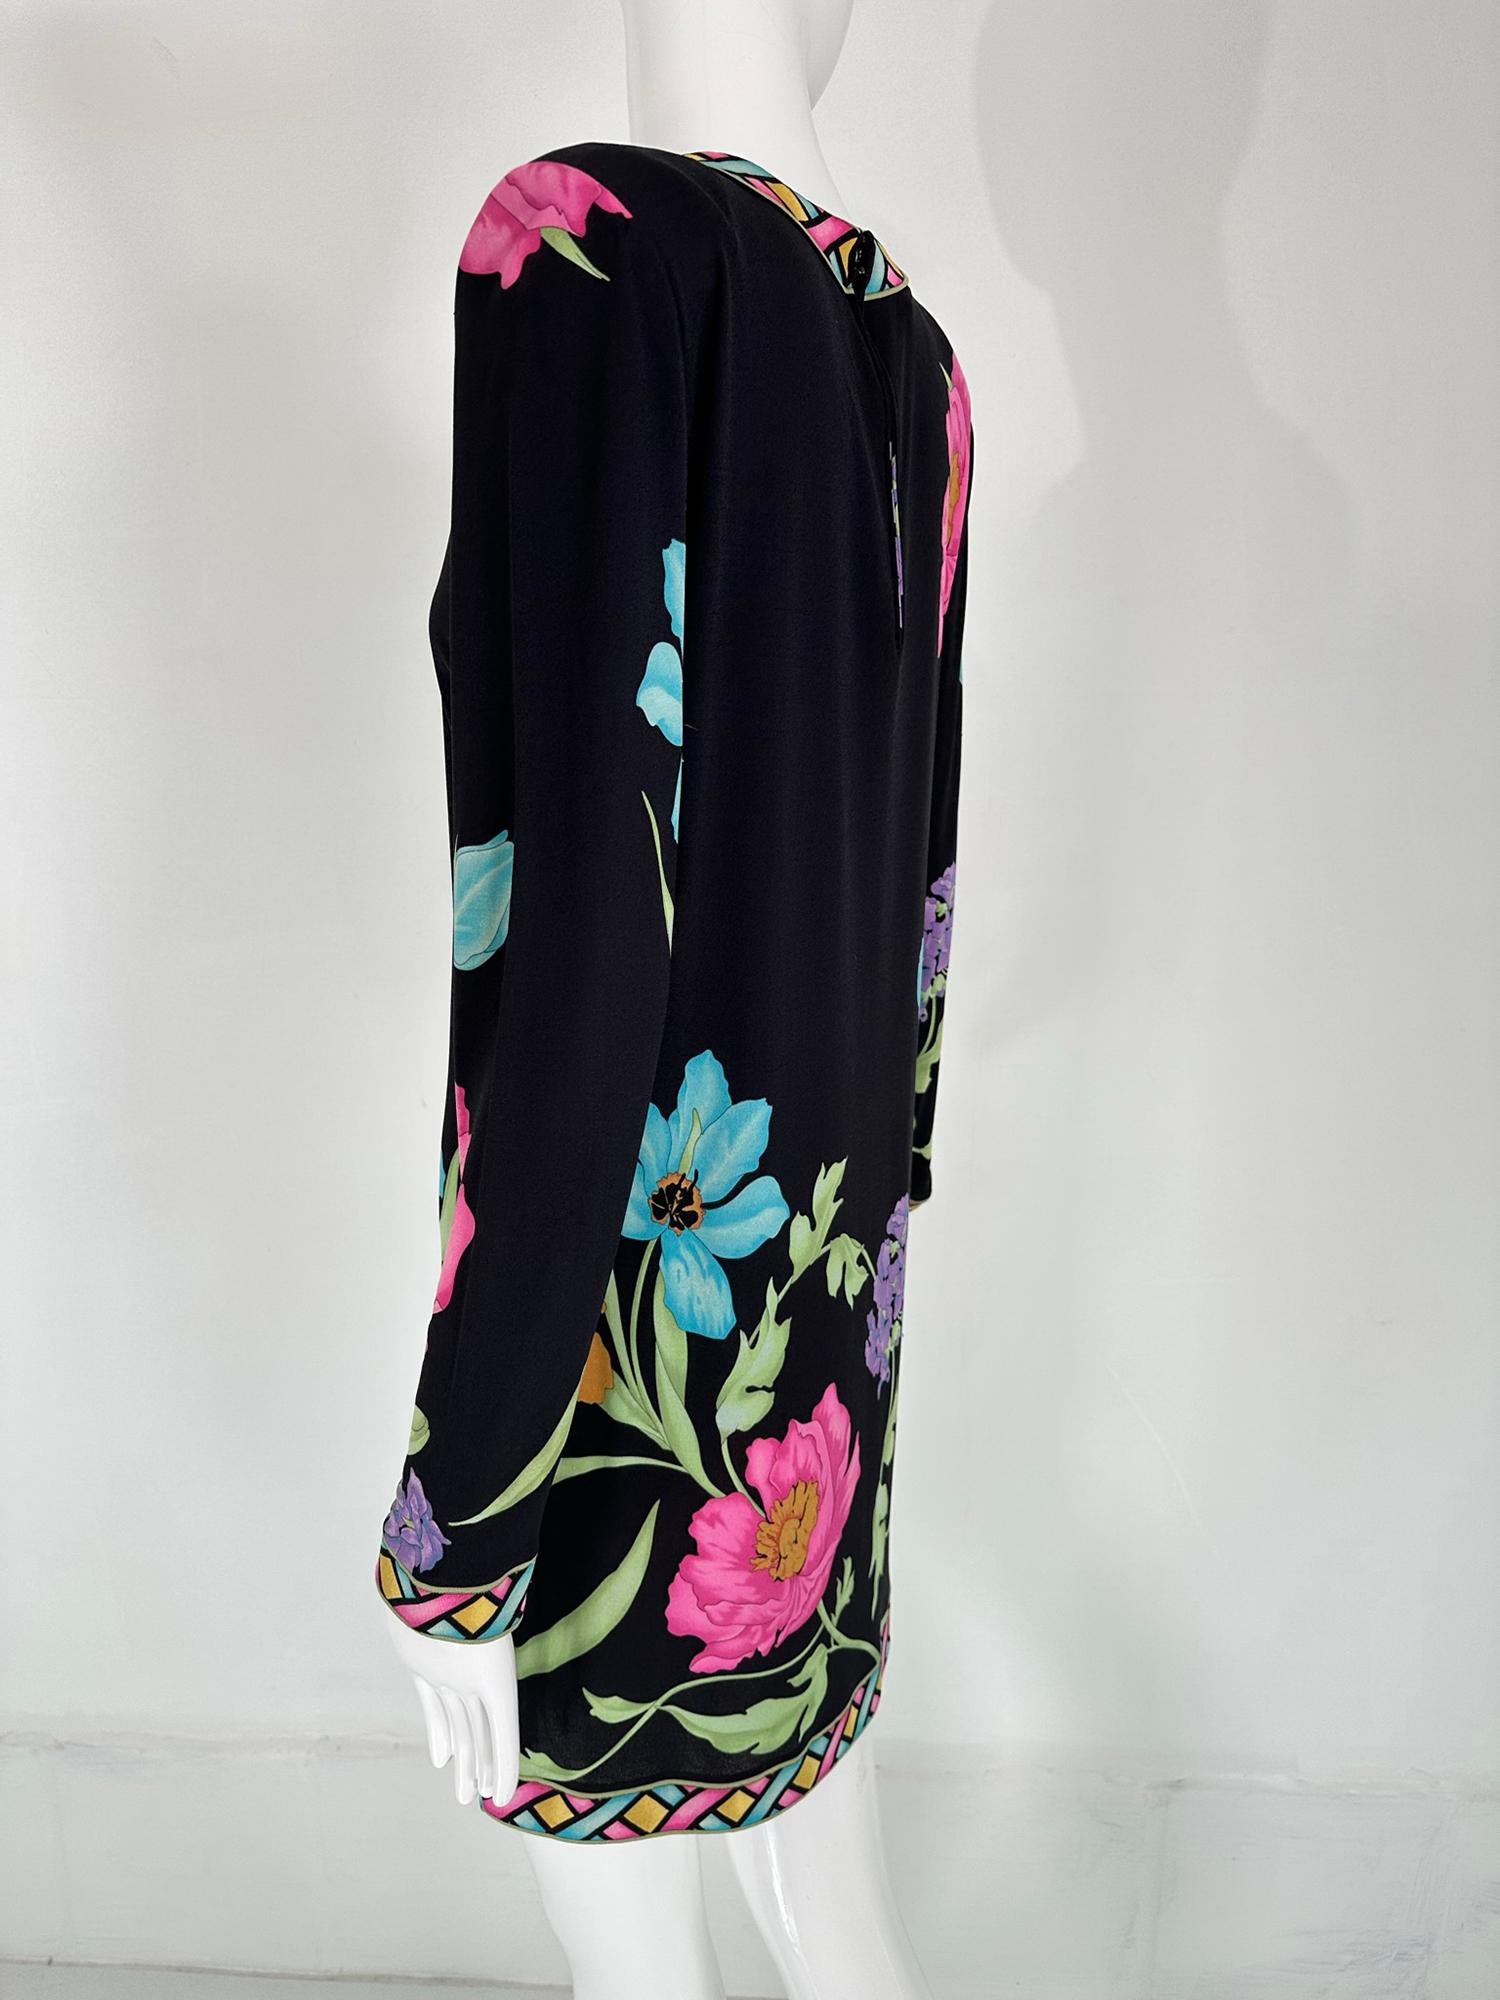 Averaro Bessi Spectacular Silk Vibrant Floral Tunic Dress 12  For Sale 6